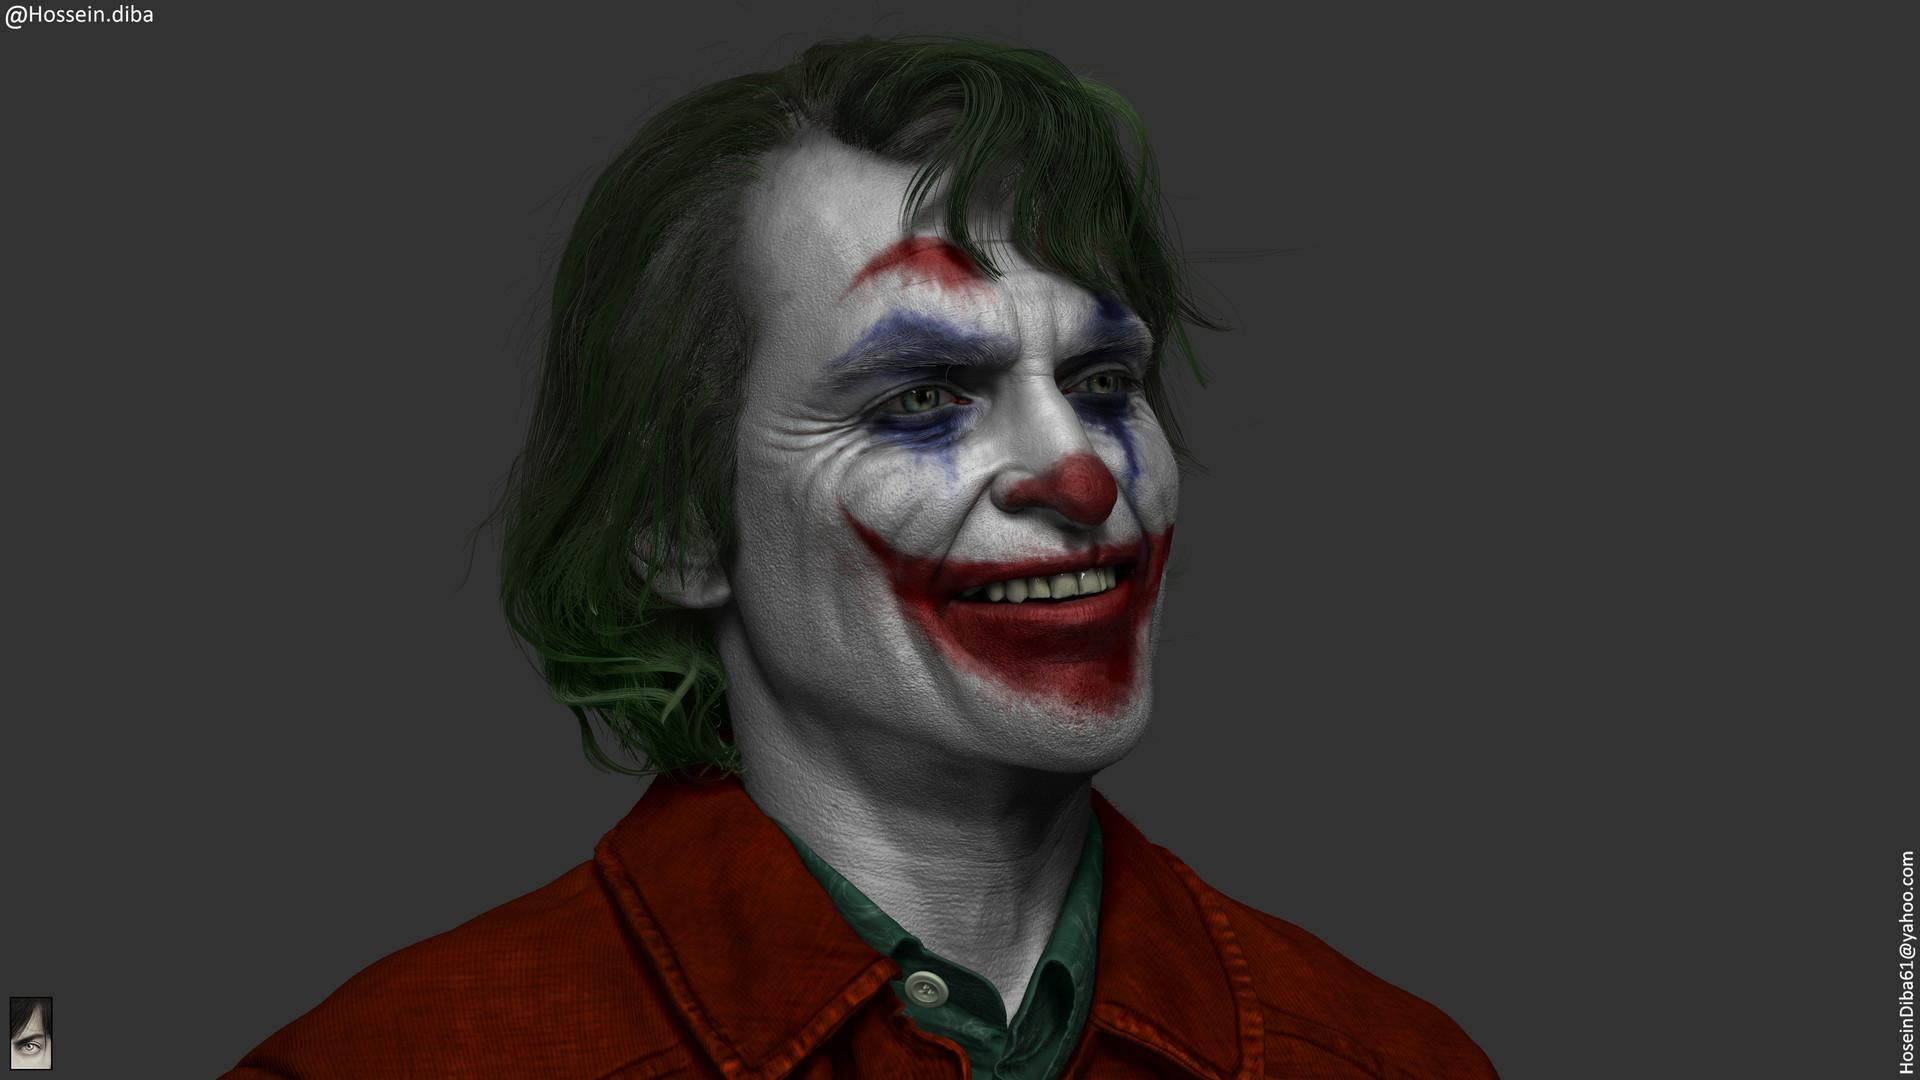 Joker (Joaquin Phoenix), Hossein Diba